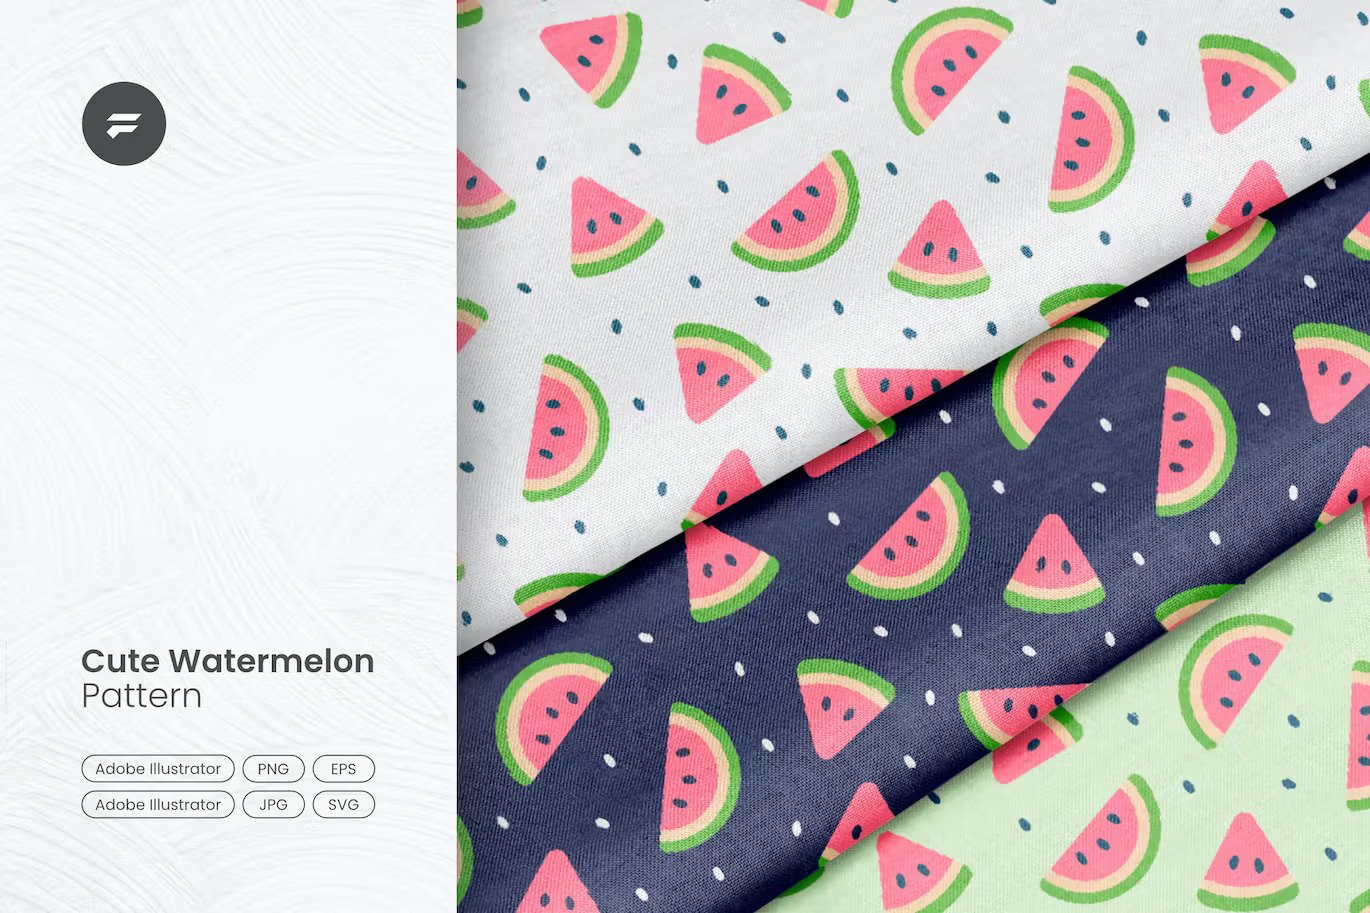 A cute watermelon pattern